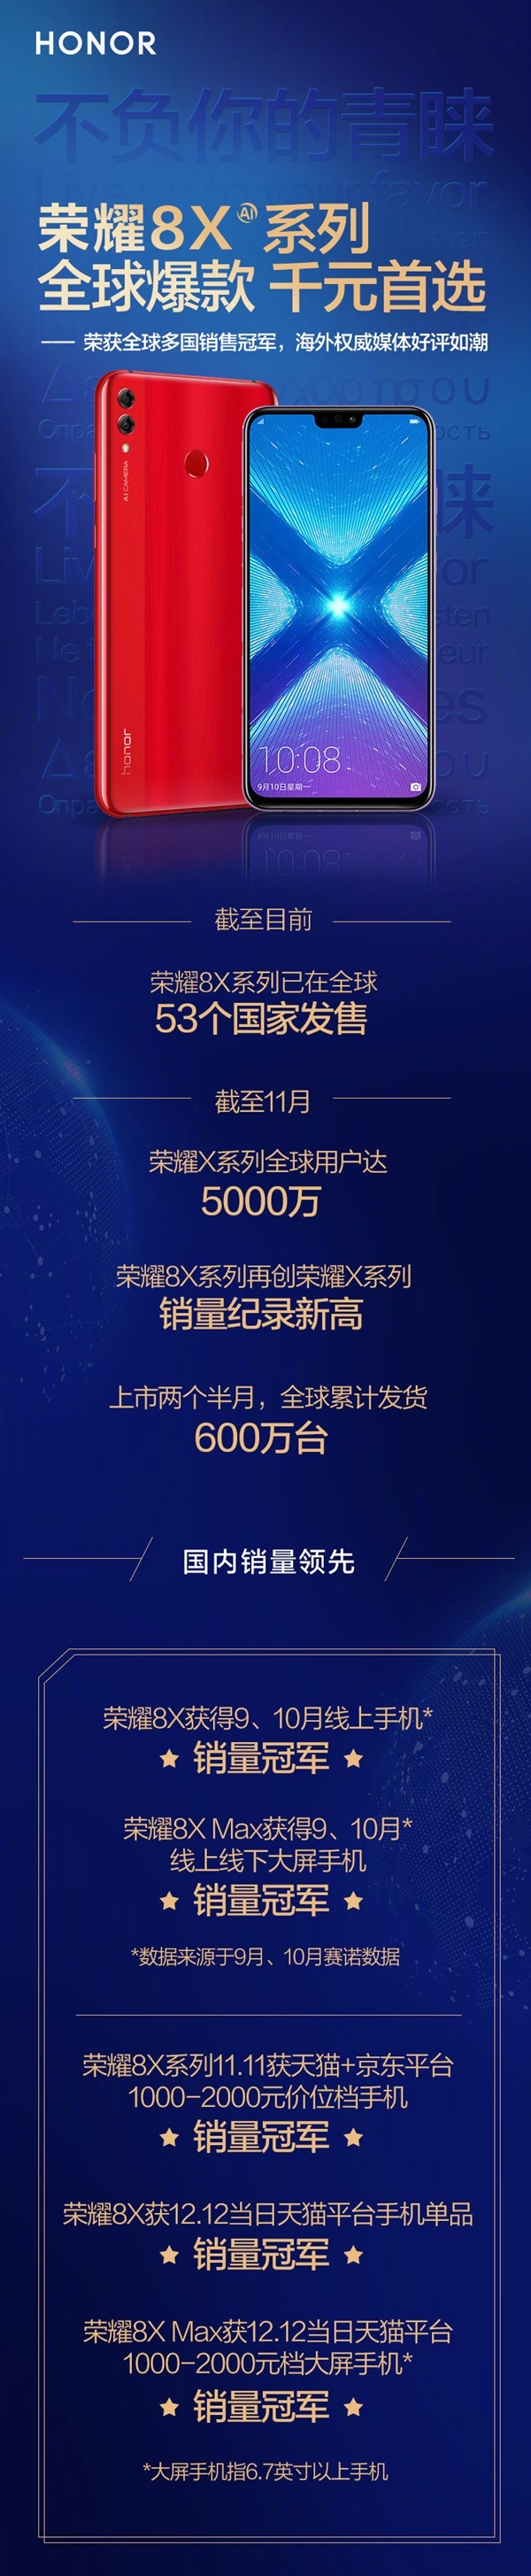 Huawei_Honor_8X_official_55.jpg